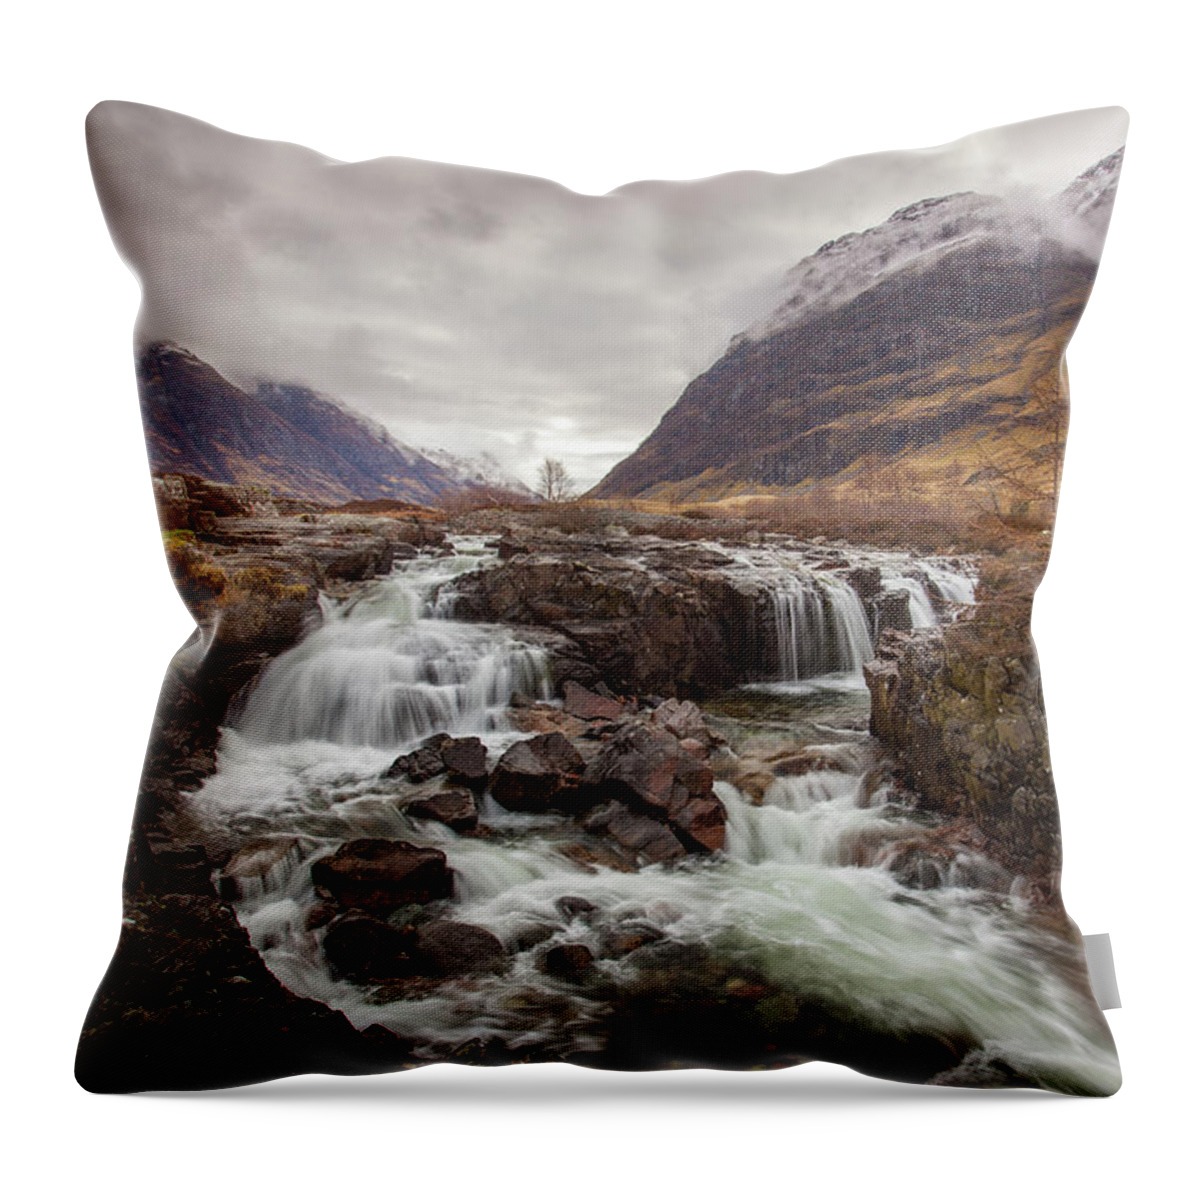 River Coe Throw Pillow featuring the photograph River Coe, Glencoe - winter by Anita Nicholson